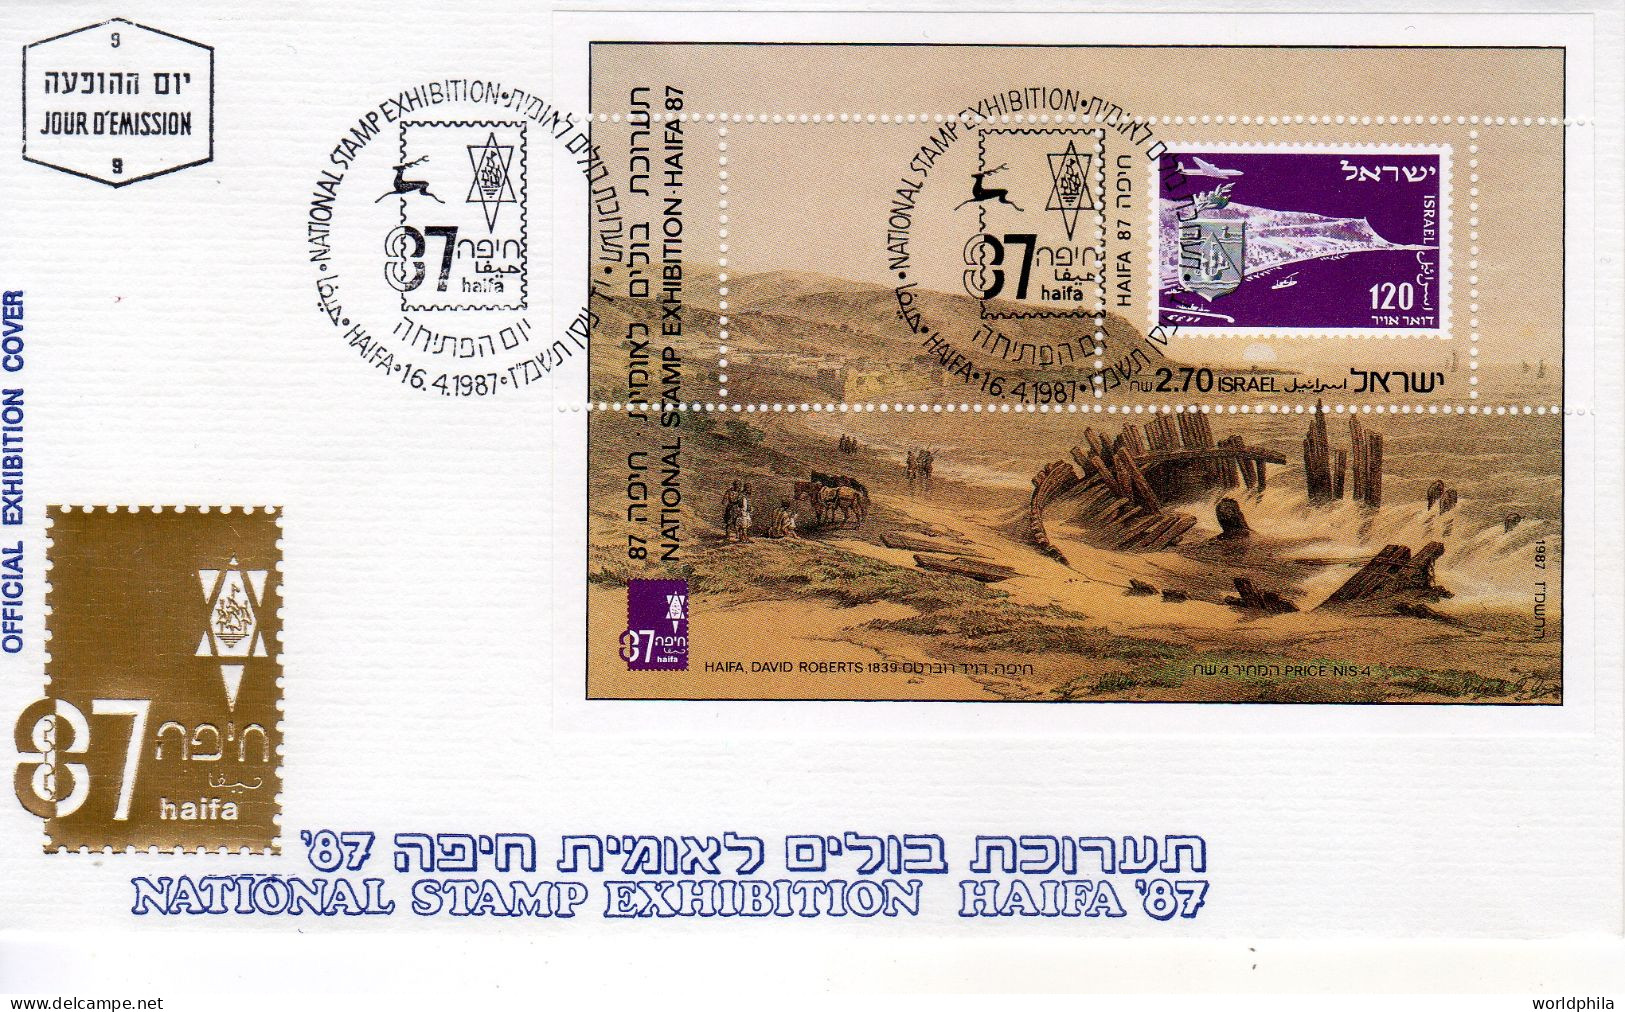 ISRAEL "Haifa 87" National Stamp Exhibition Registered Cacheted FDC "Haifa Bay" Souvenir Sheet - FDC